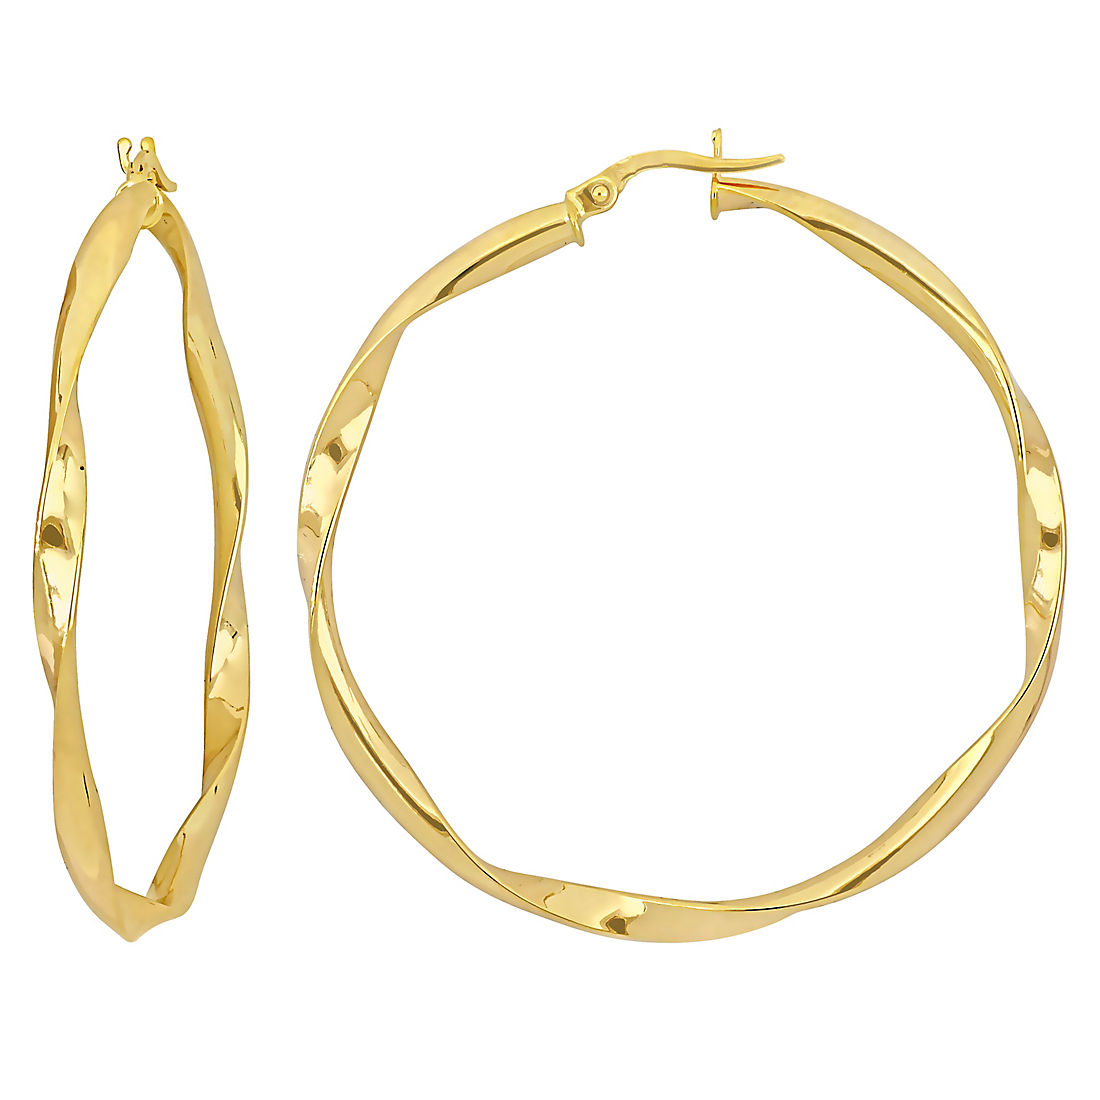 47mm Twisted Hoop Earrings in 10k Yellow Gold | BJ\'s Wholesale Club